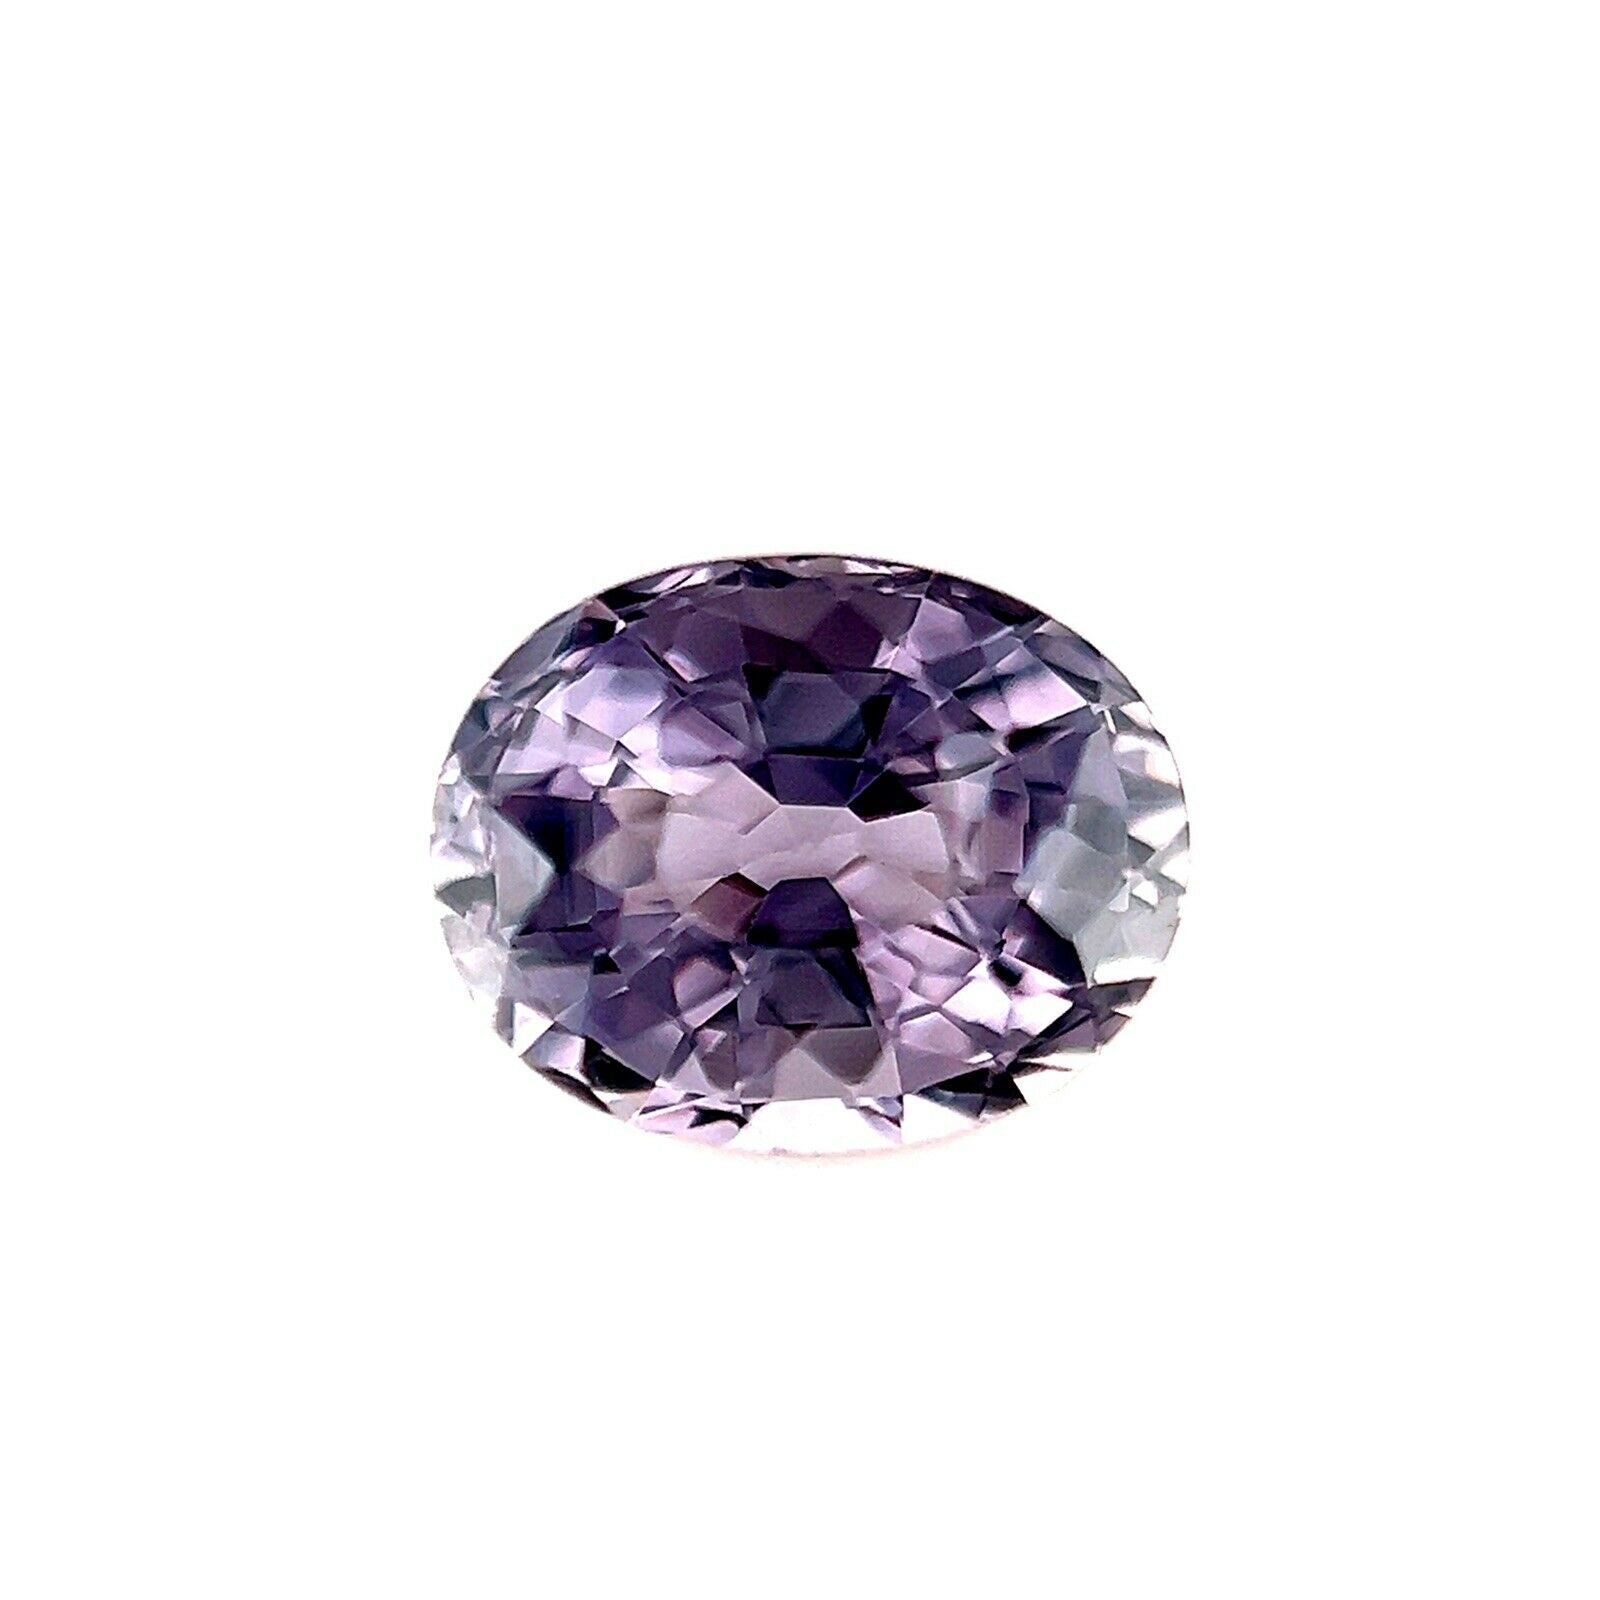 Fine pierre précieuse rare non sertie en titane, spinelle naturelle violette taille ovale 1,72 carat